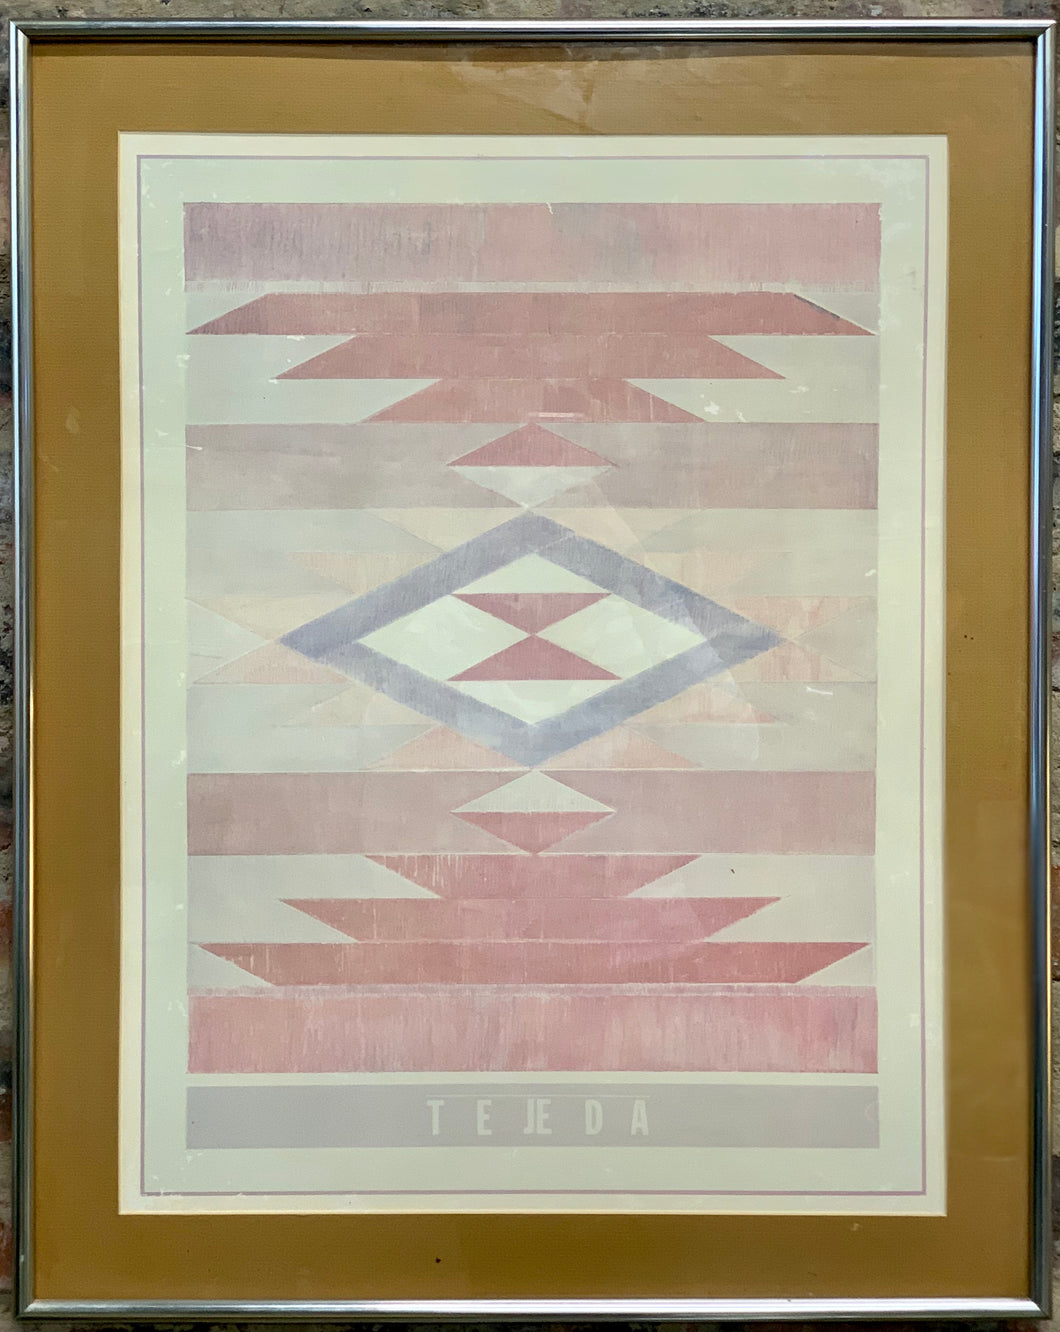 Framed Oscar Tejeda offset lithograph-Southwestern print